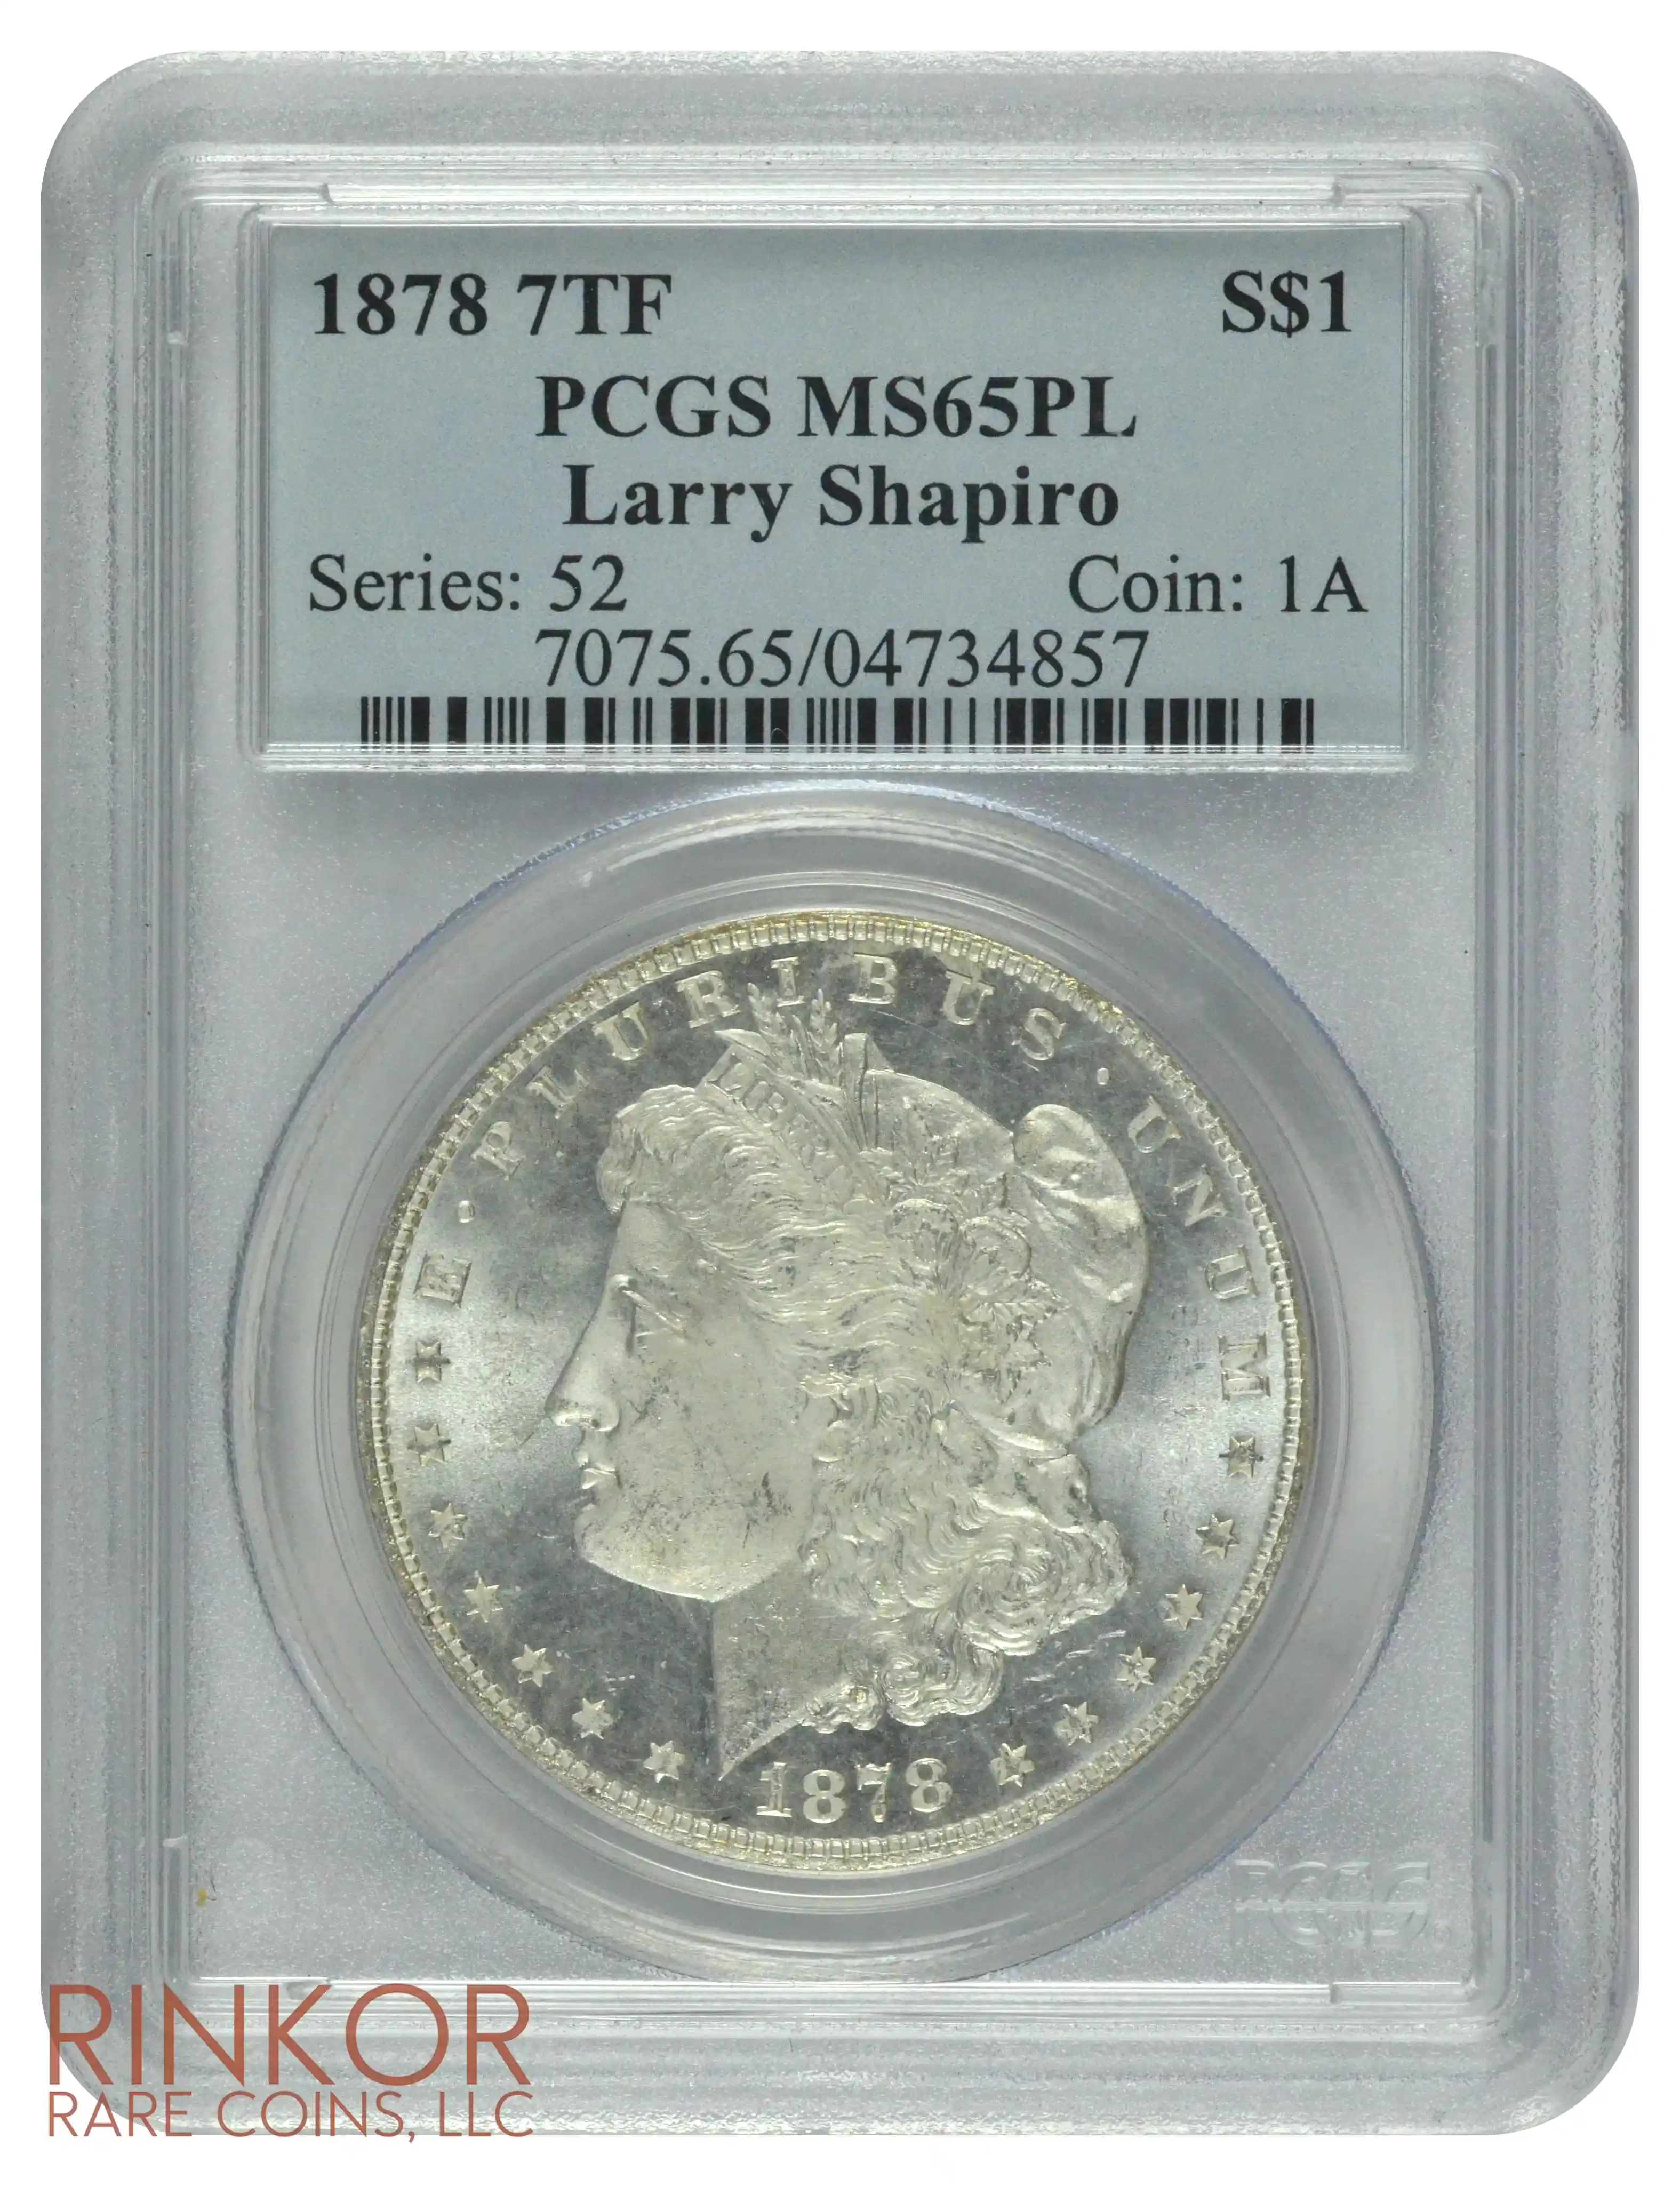 1878 7TF Reverse of 1878 $1 PCGS MS 65 PL